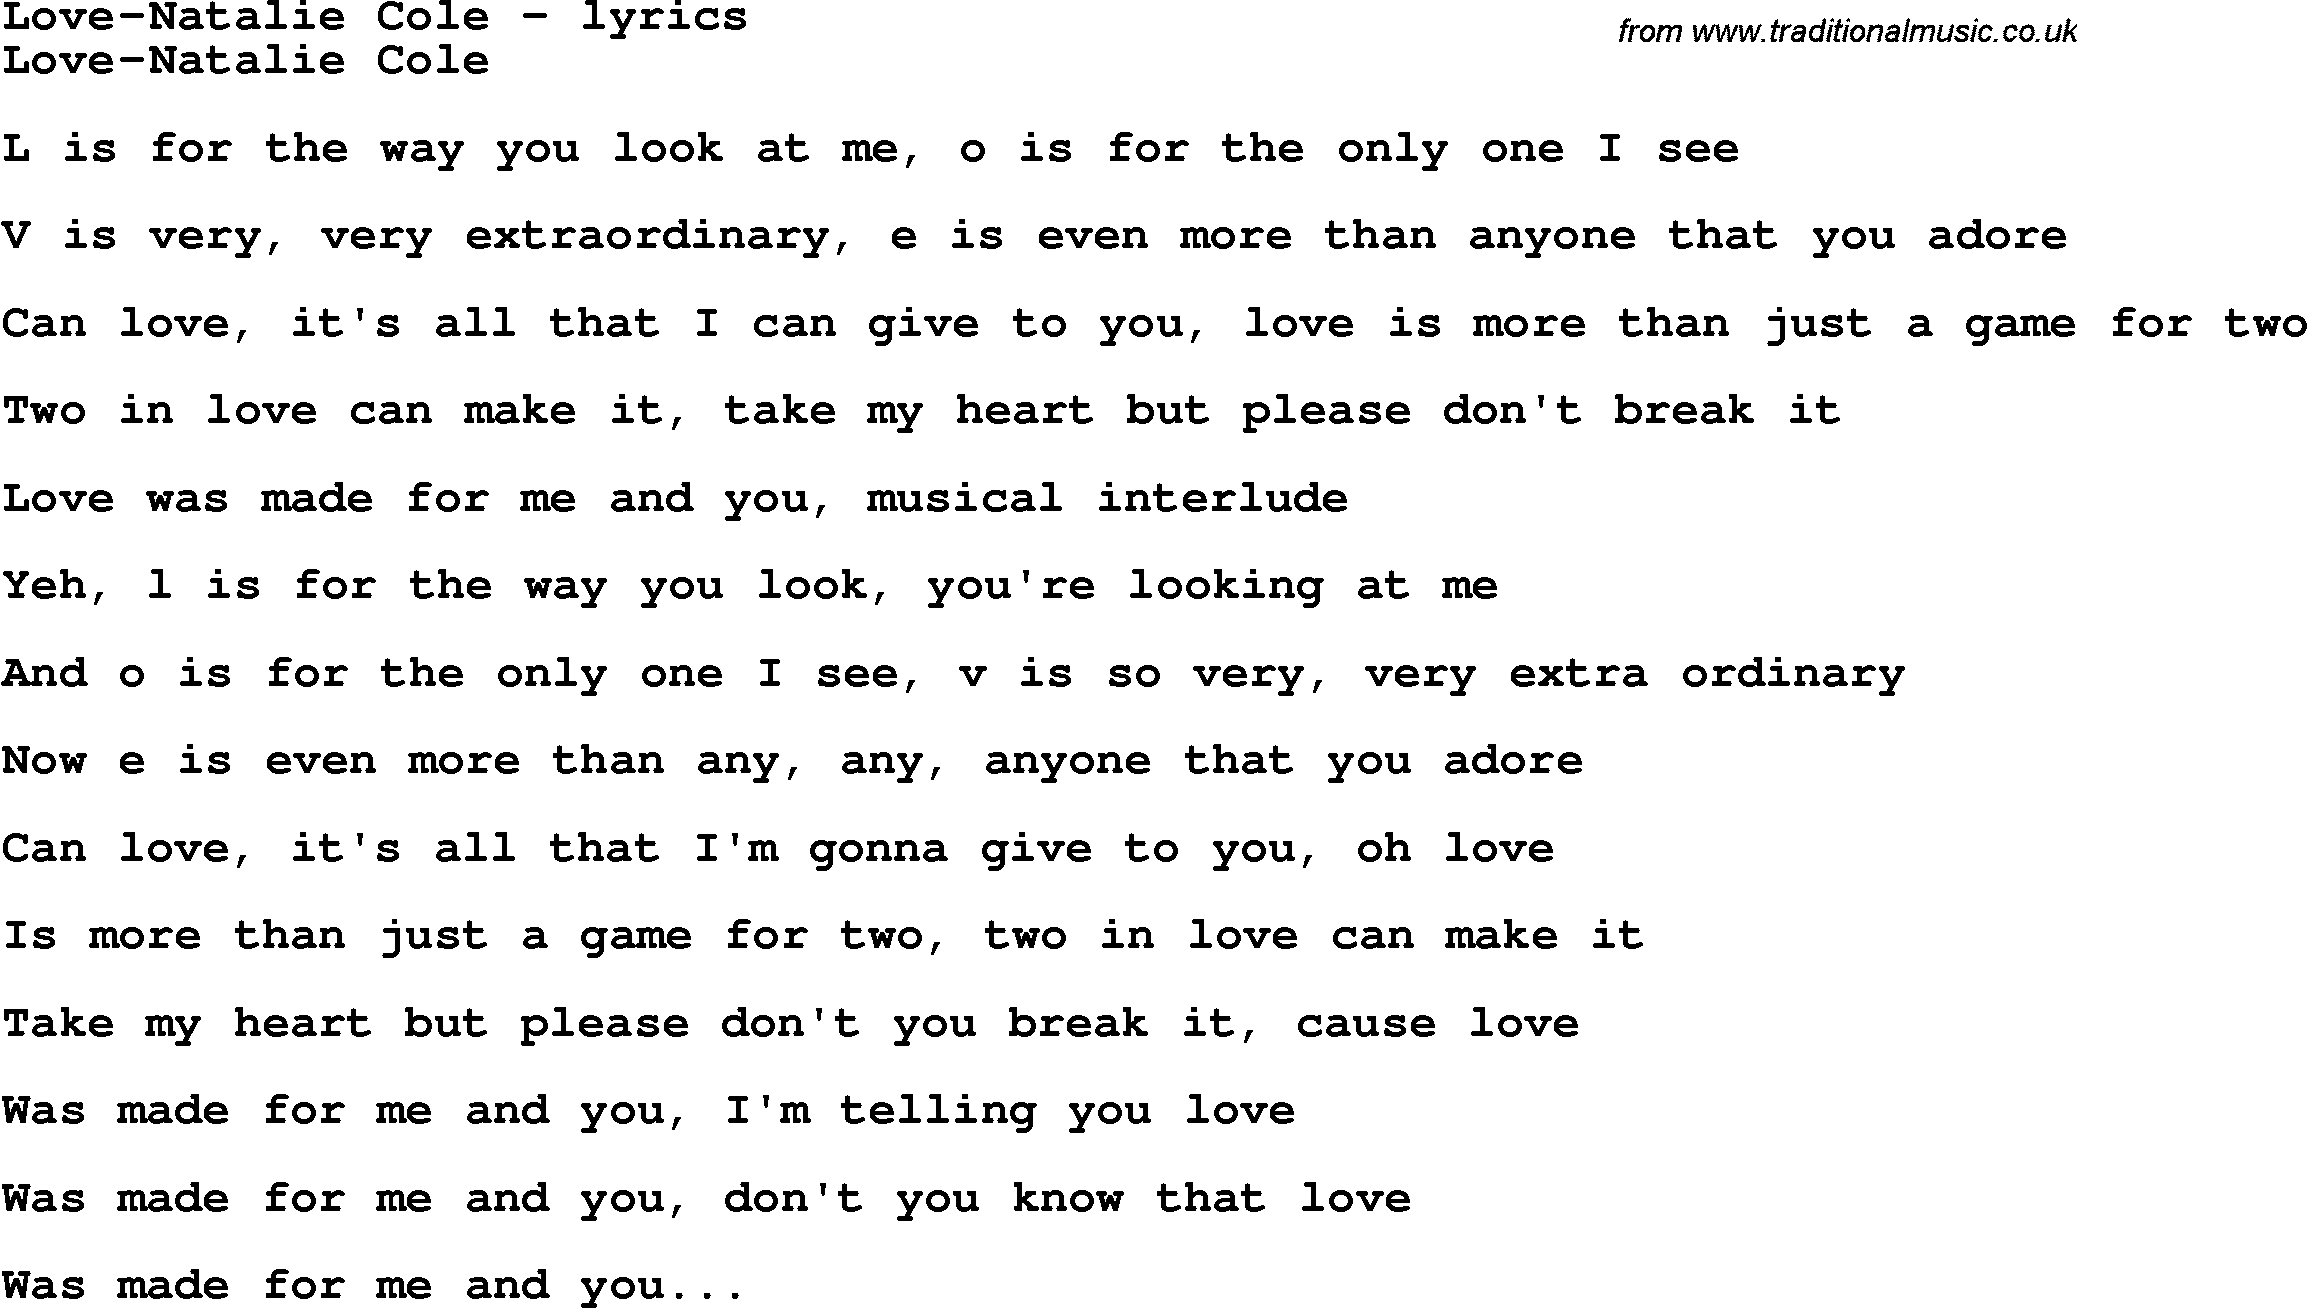 Love Song Lyrics for: Love-Natalie Cole